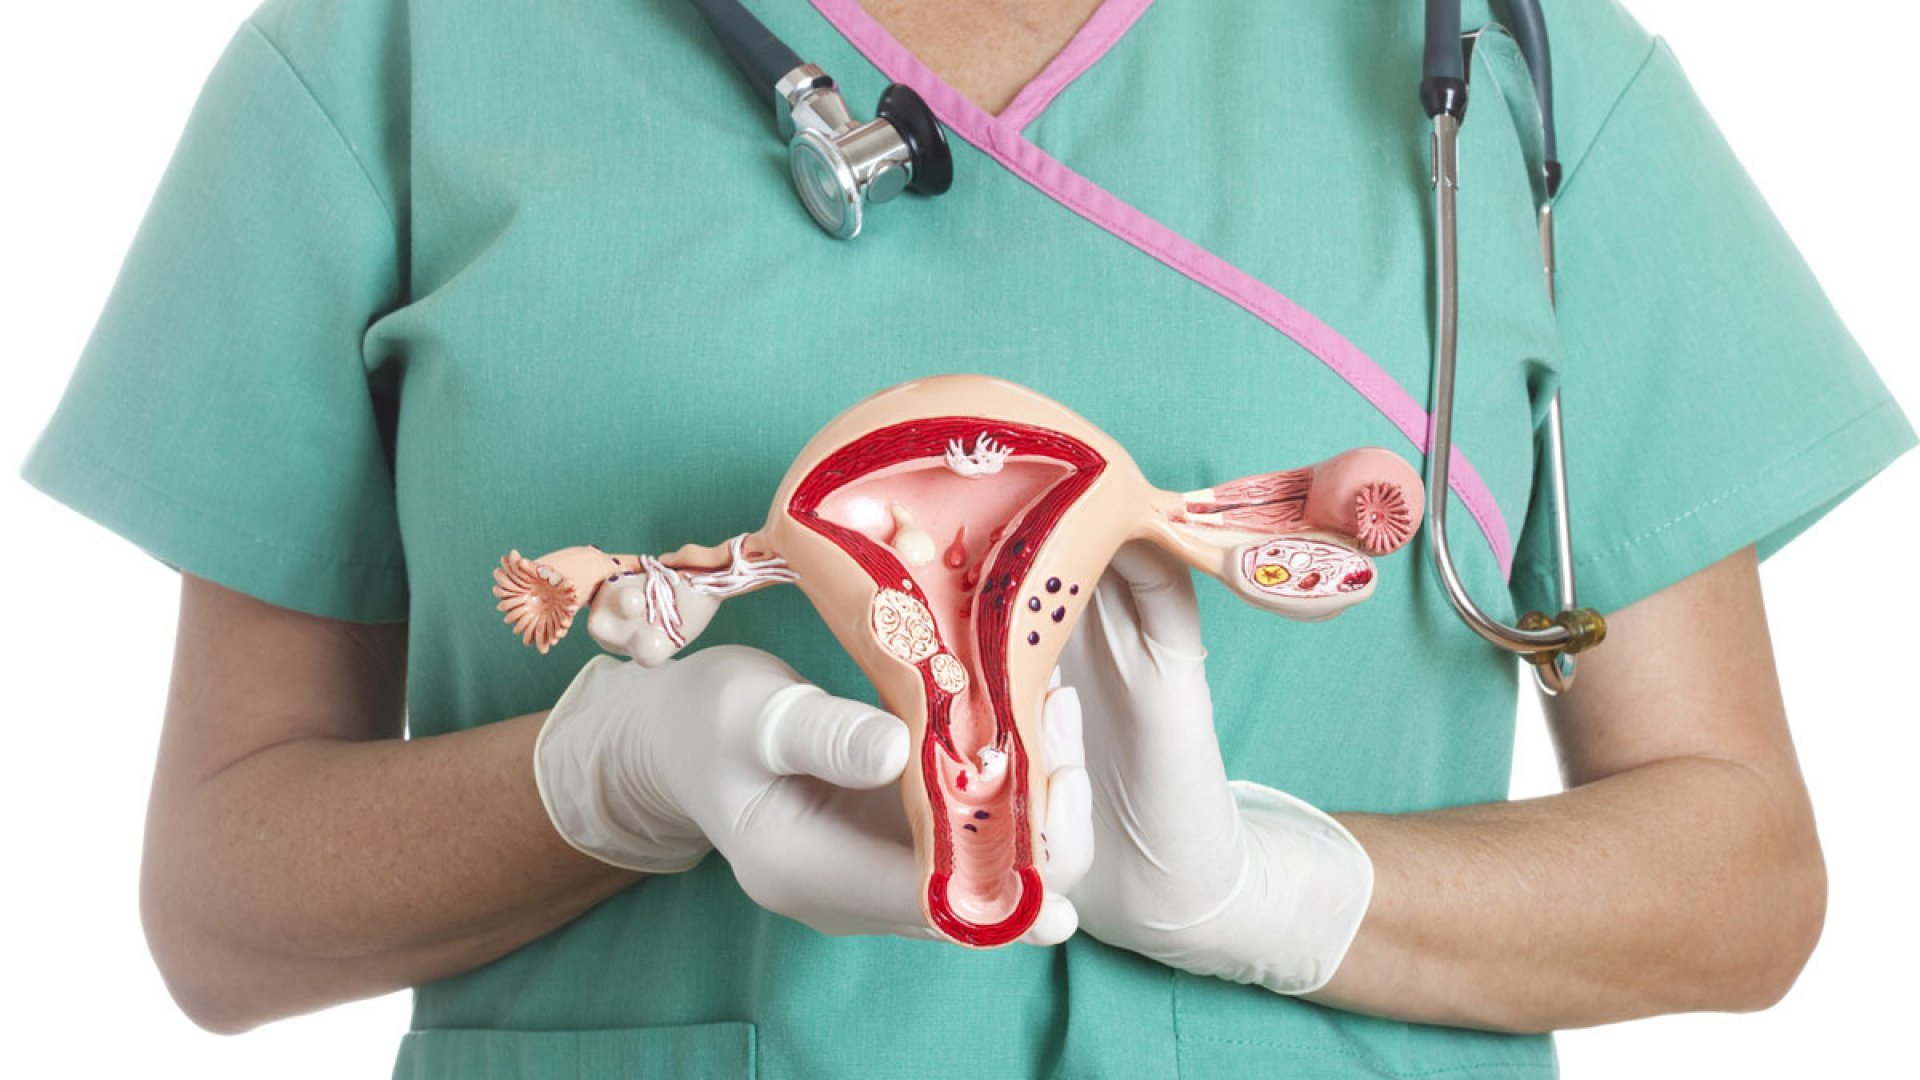 Sarcoma uterino esperanza de vida